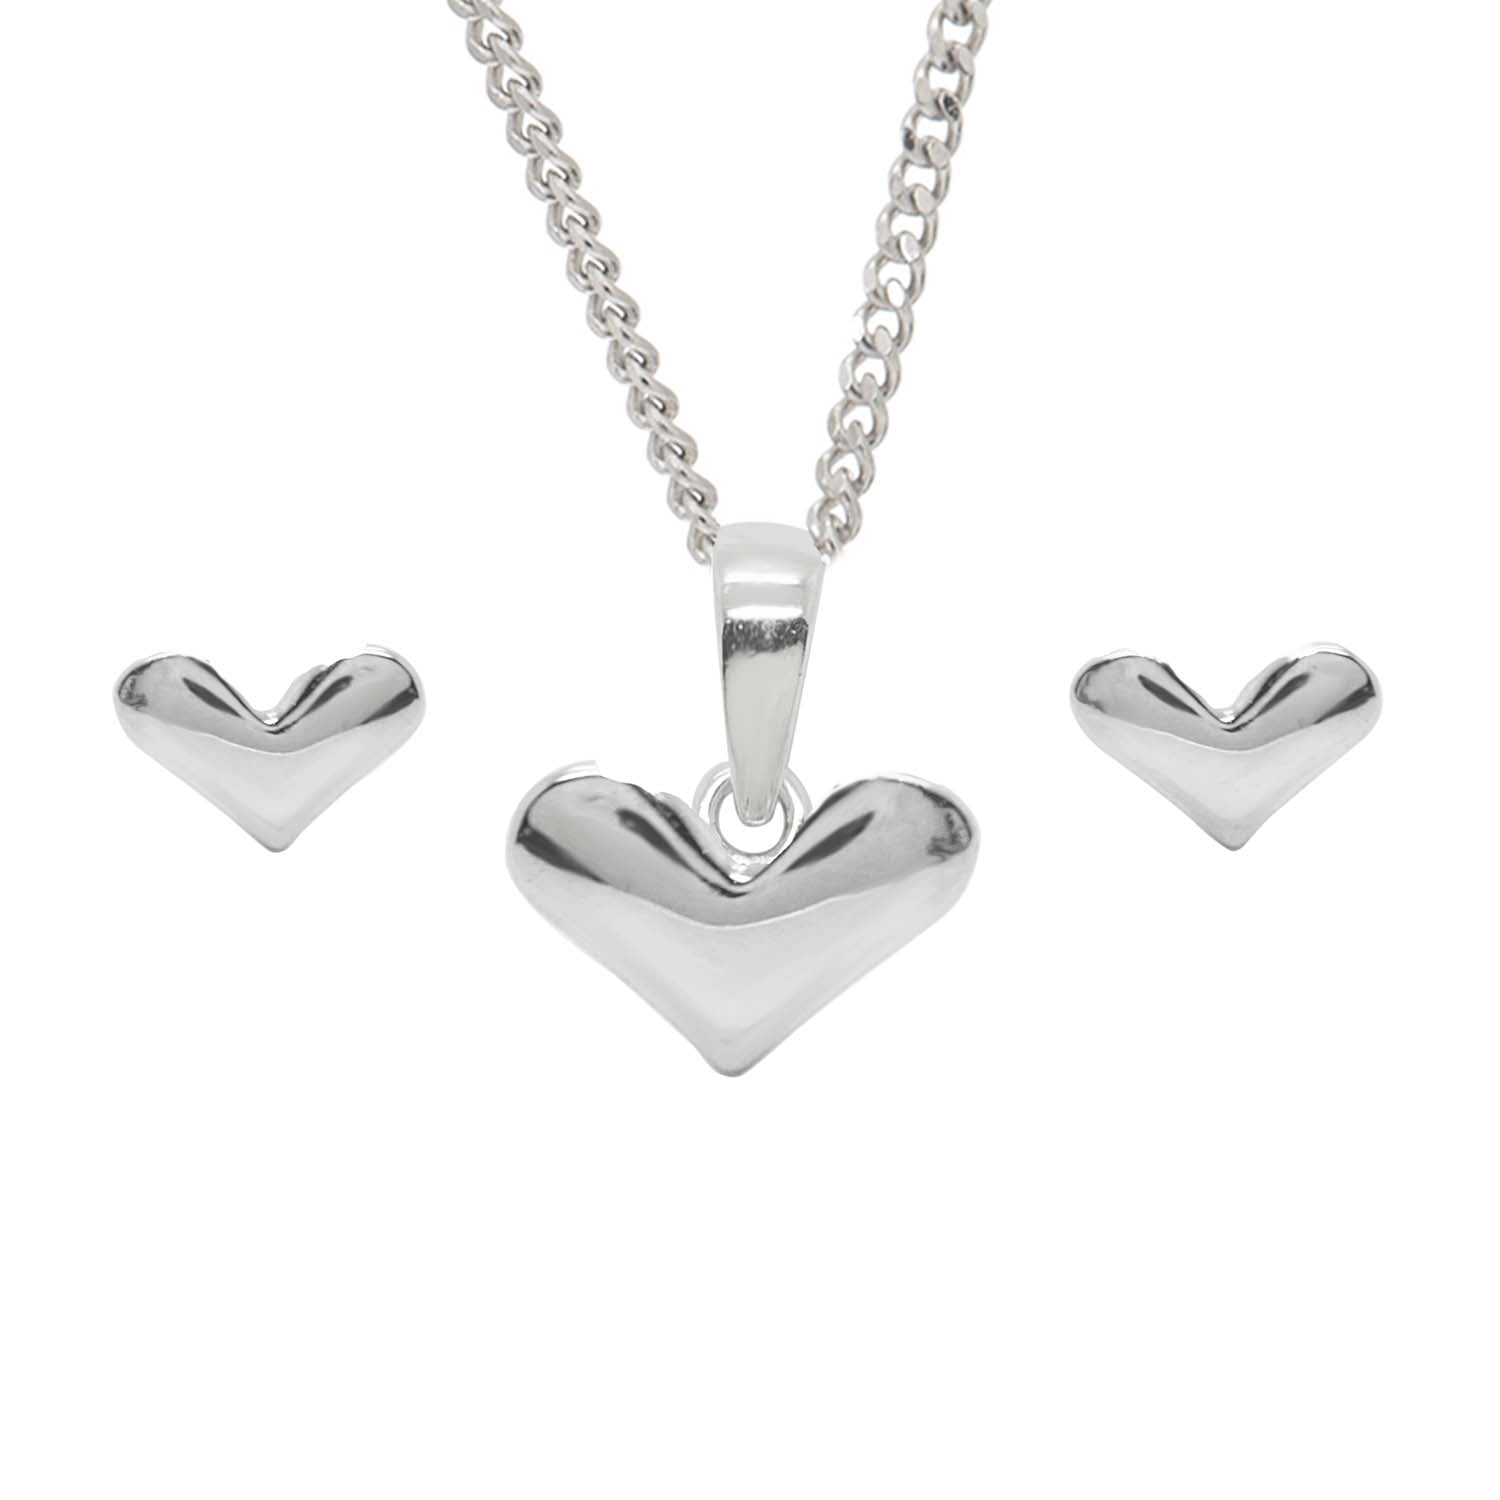 Shiny heart pendant set